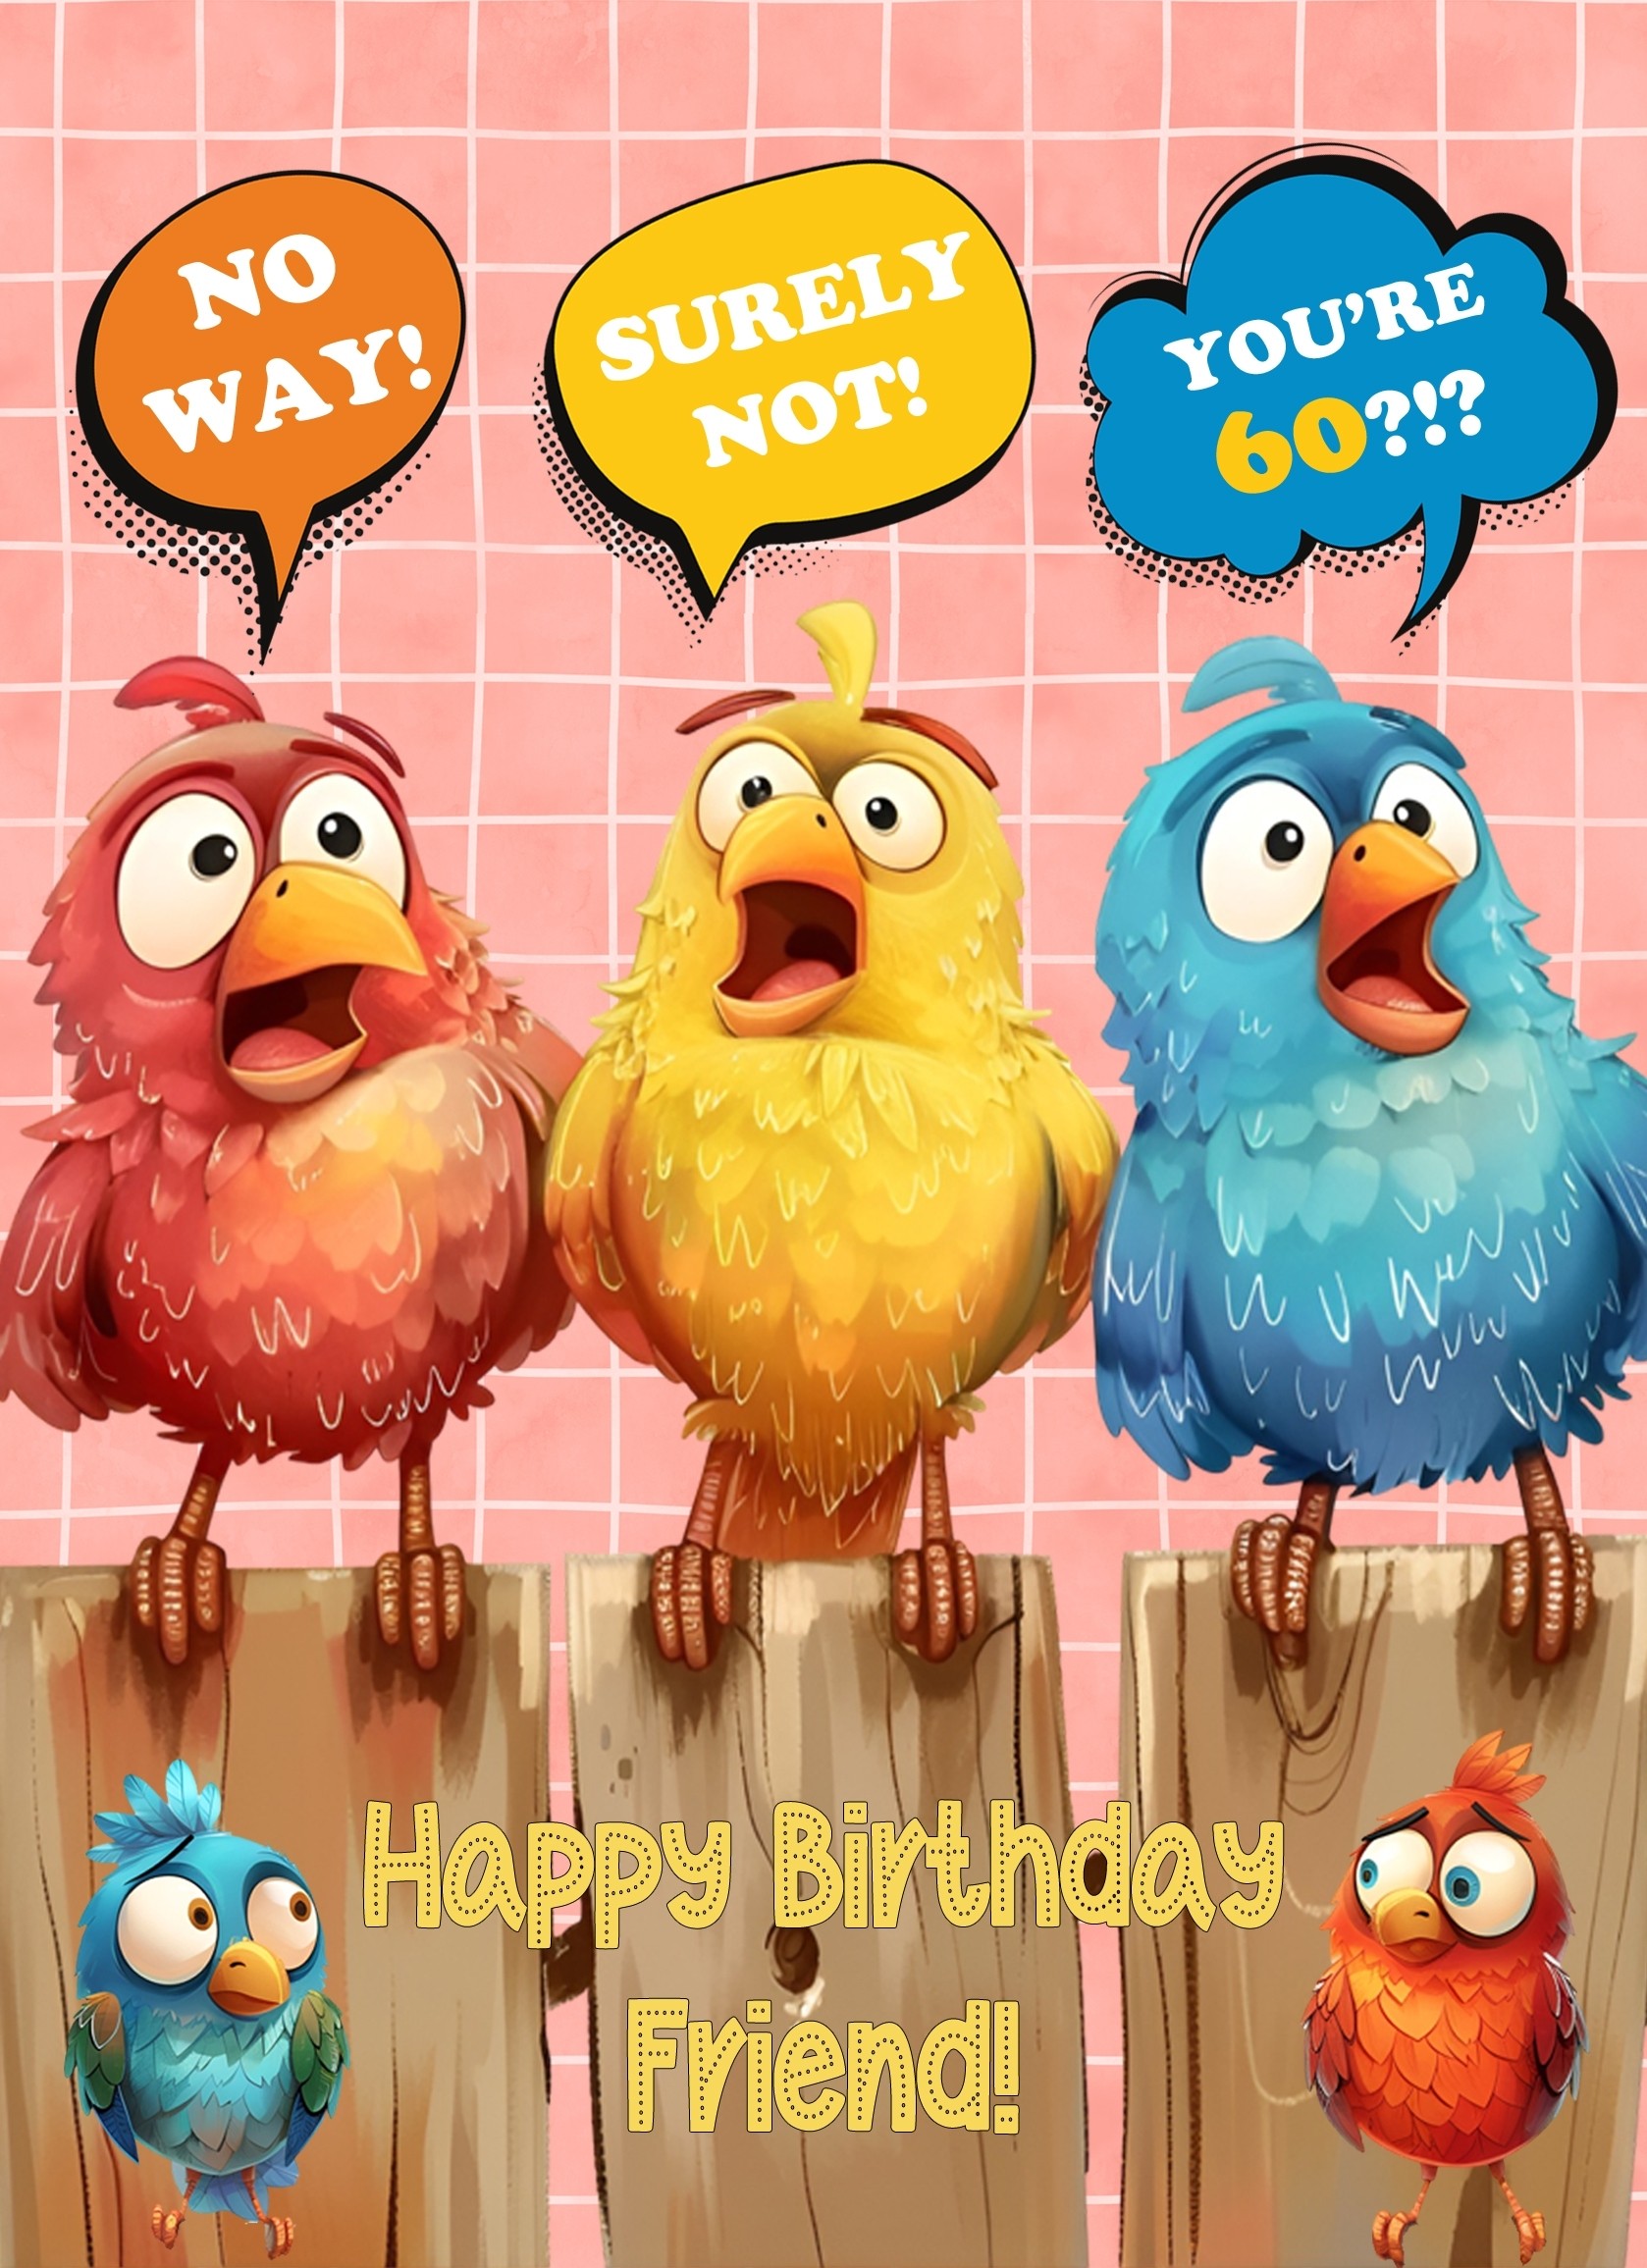 Friend 60th Birthday Card (Funny Birds Surprised)